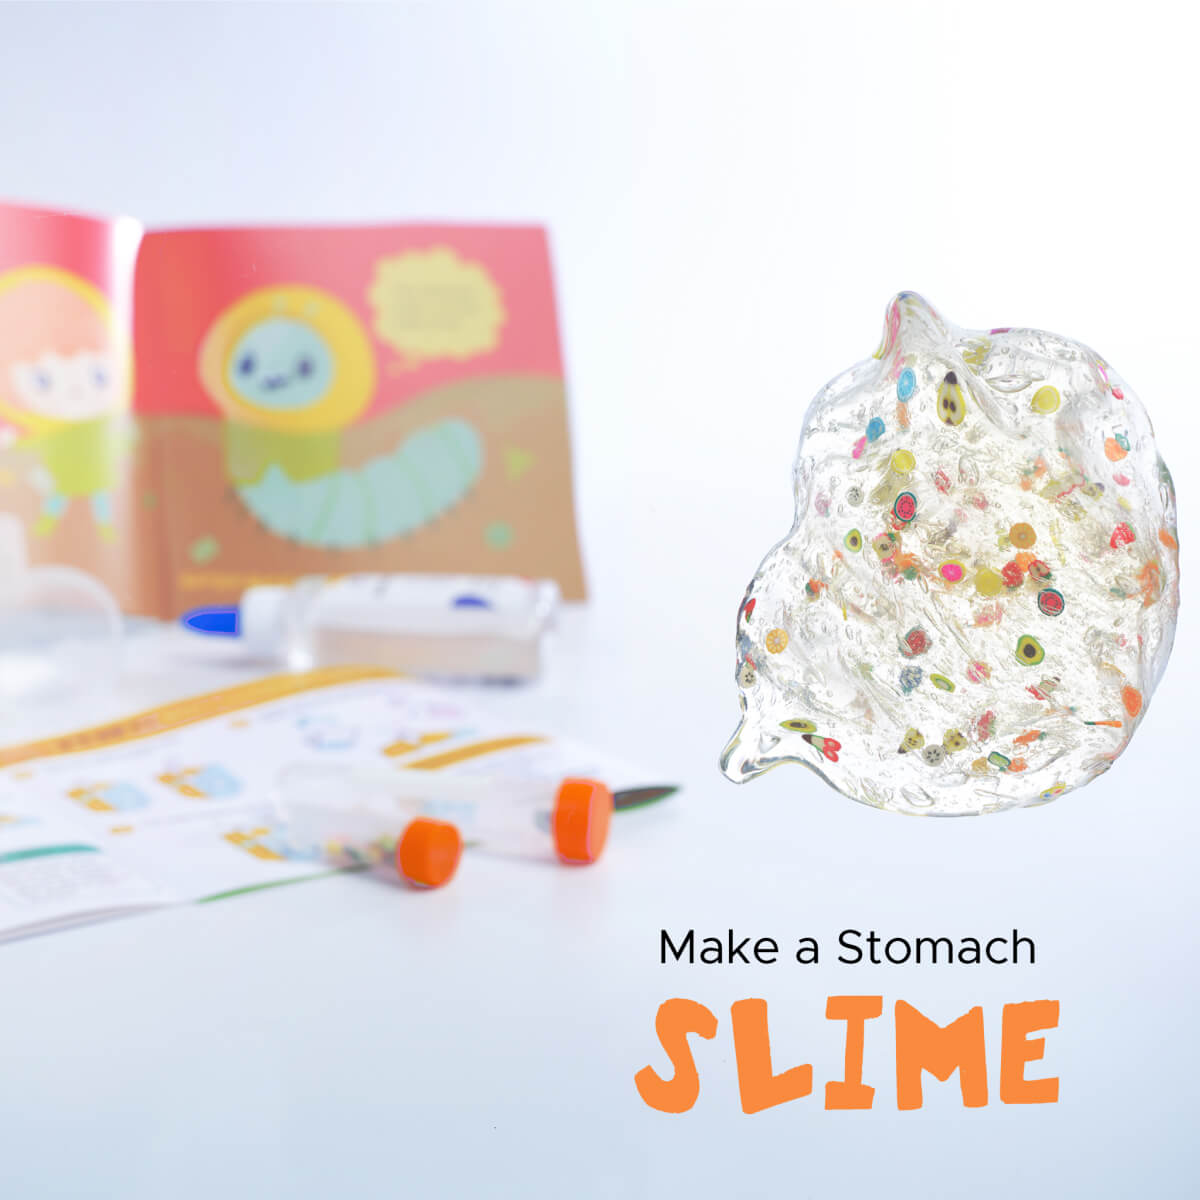 STEAM科學手作史萊姆幫助幼兒理解胃消化養份的過程。